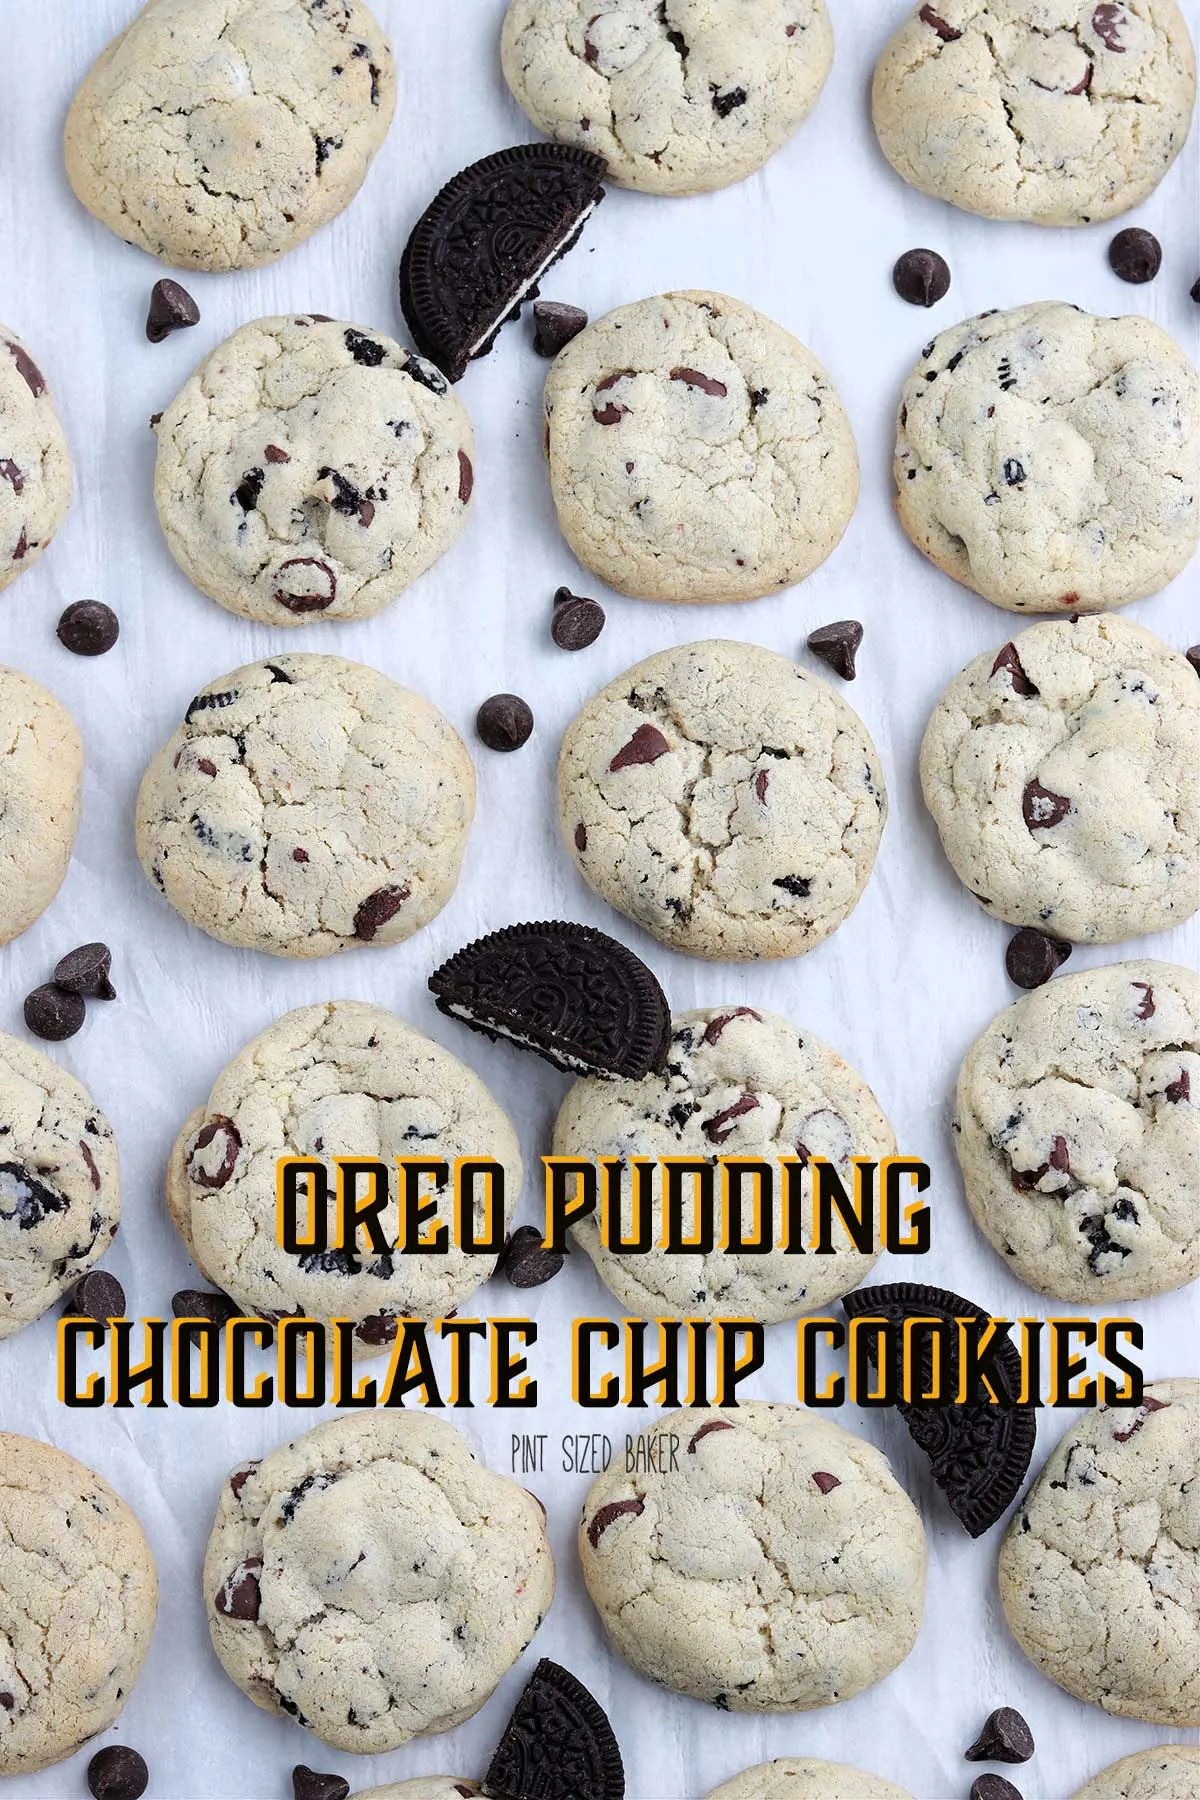 Oreo Pudding Cookies Recipe 1